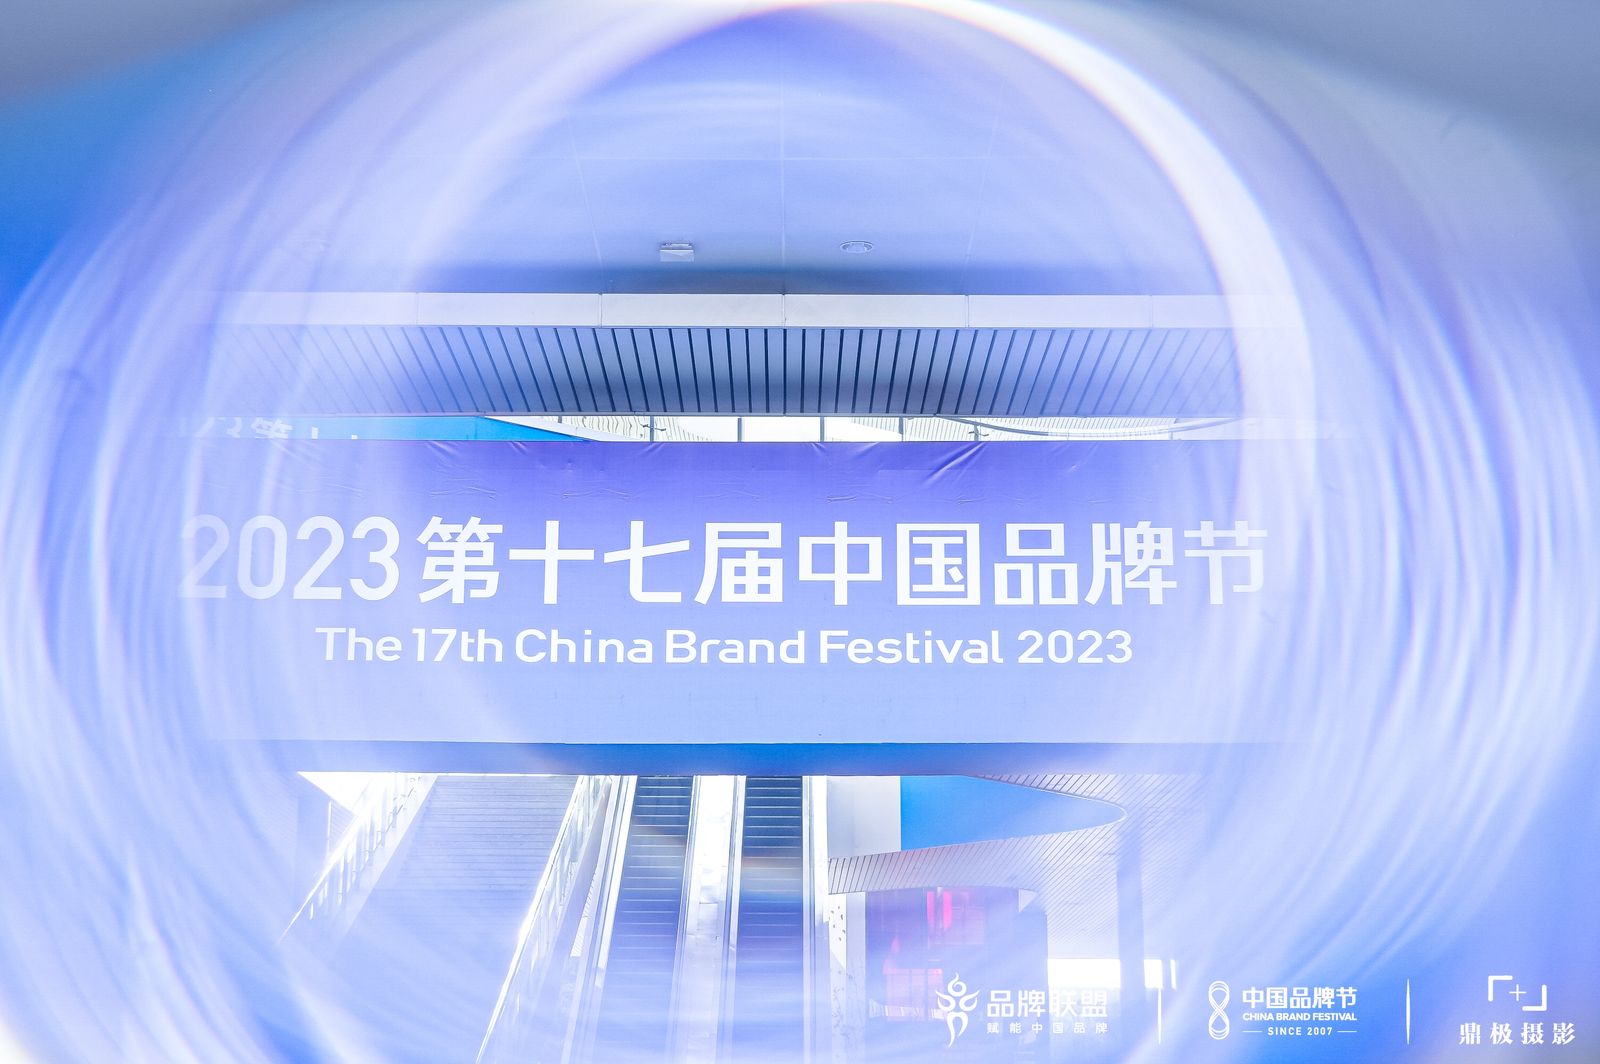 the 17th China Brand Festival 2023.jpg